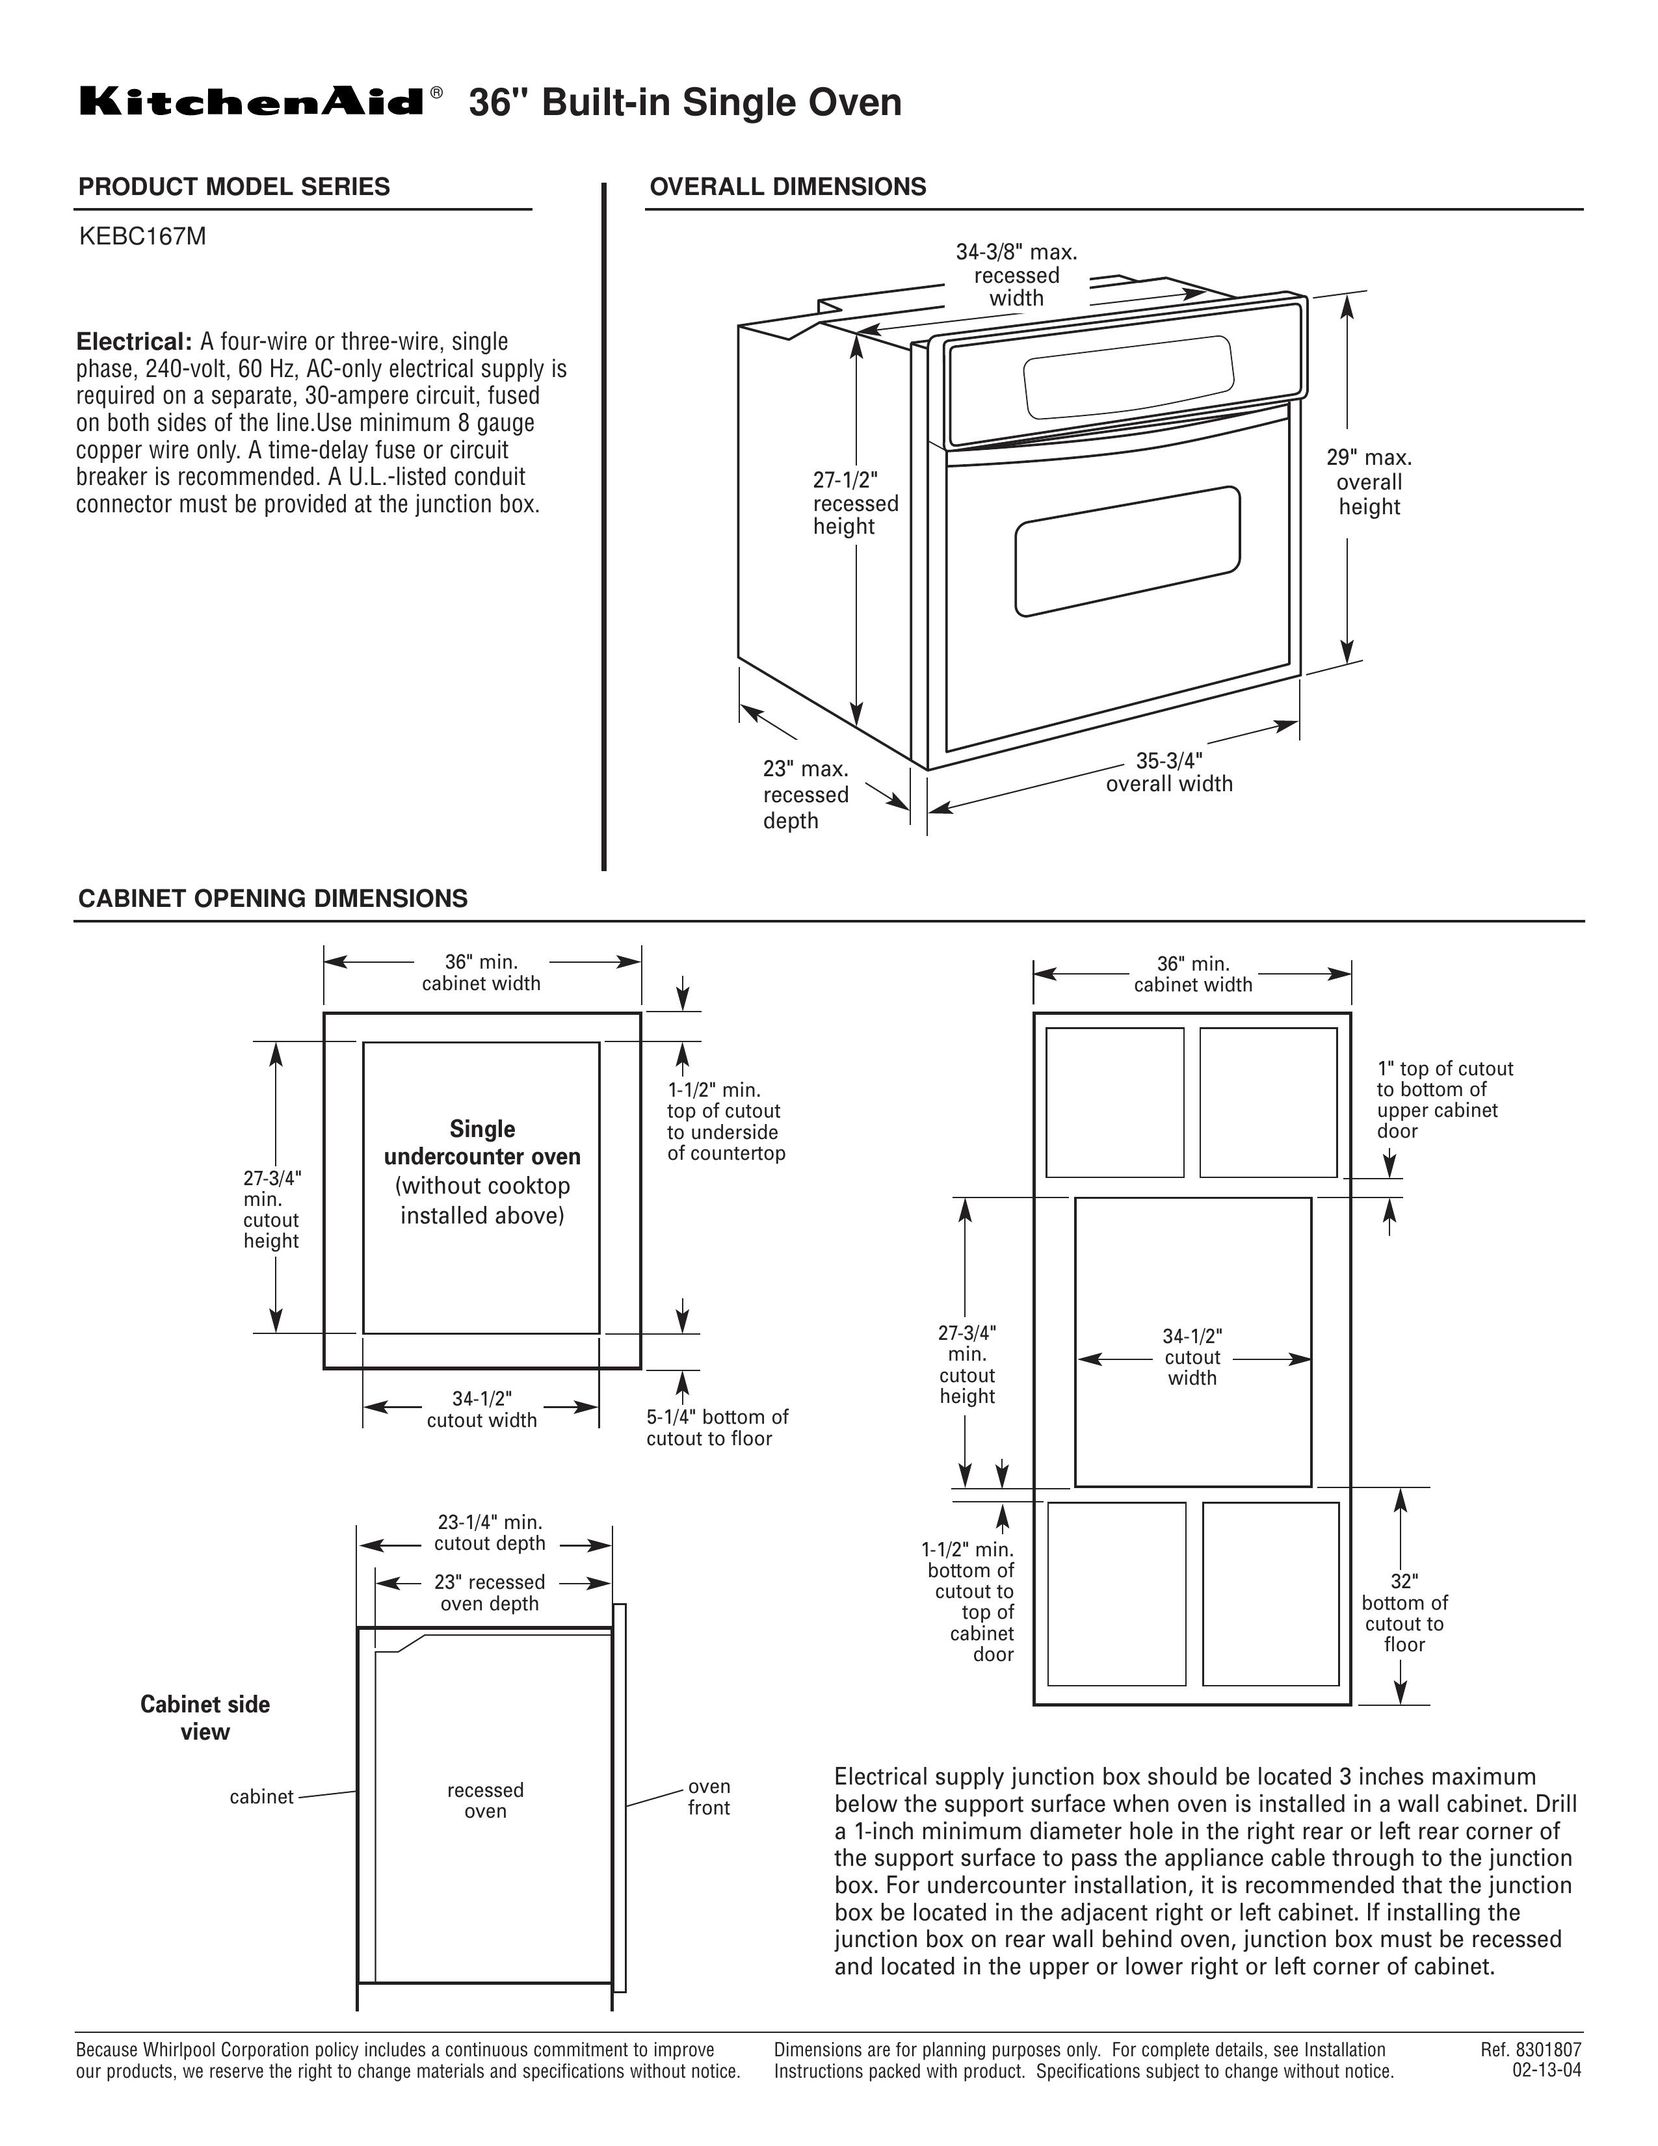 KitchenAid KEBC167M Double Oven User Manual